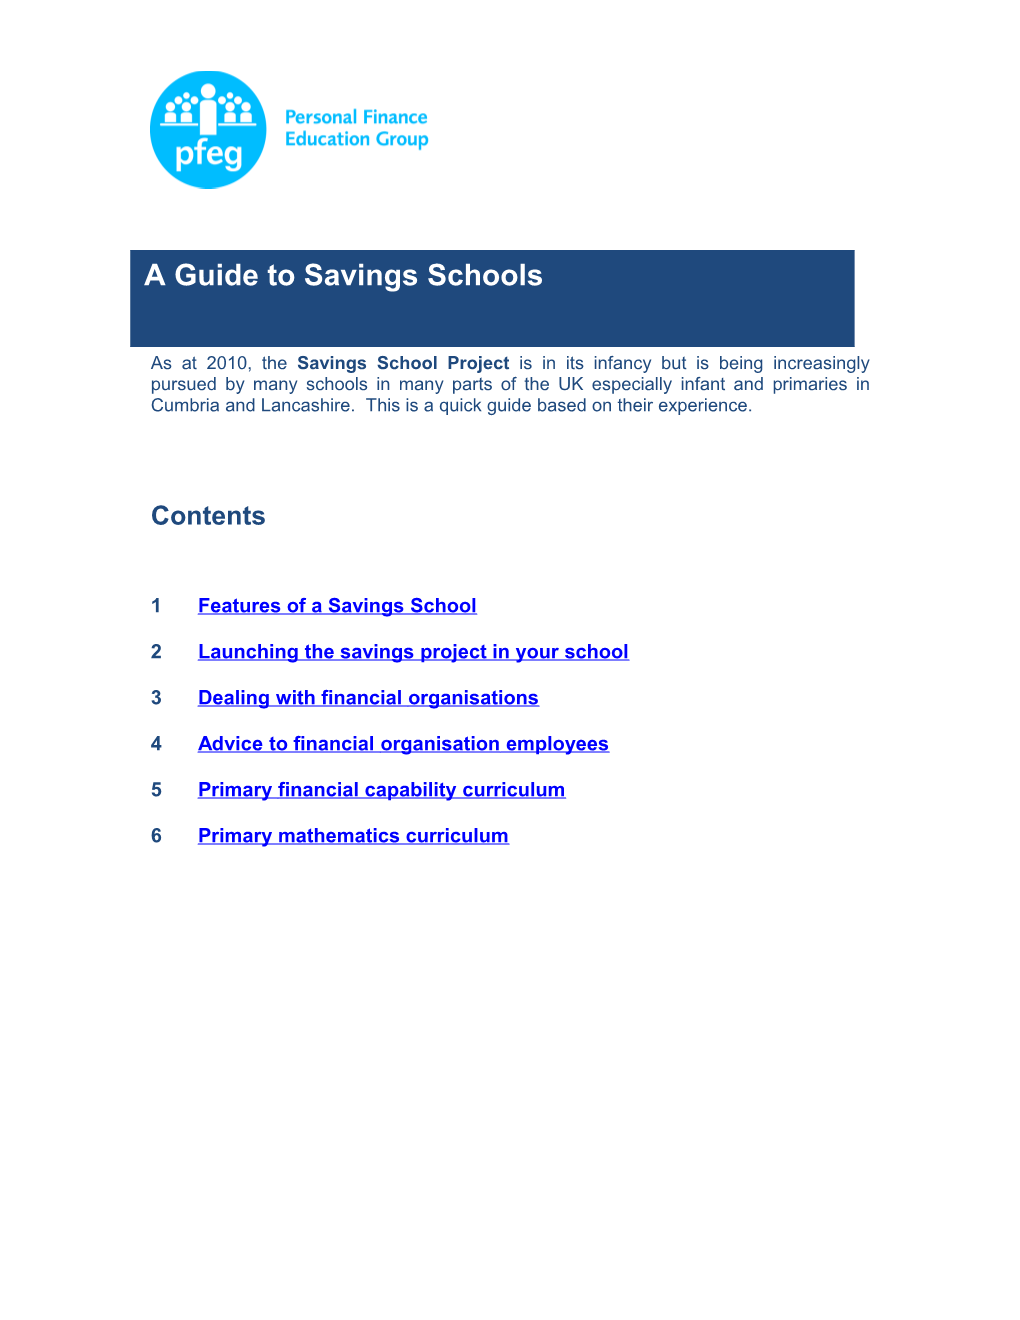 The Savings School Idea